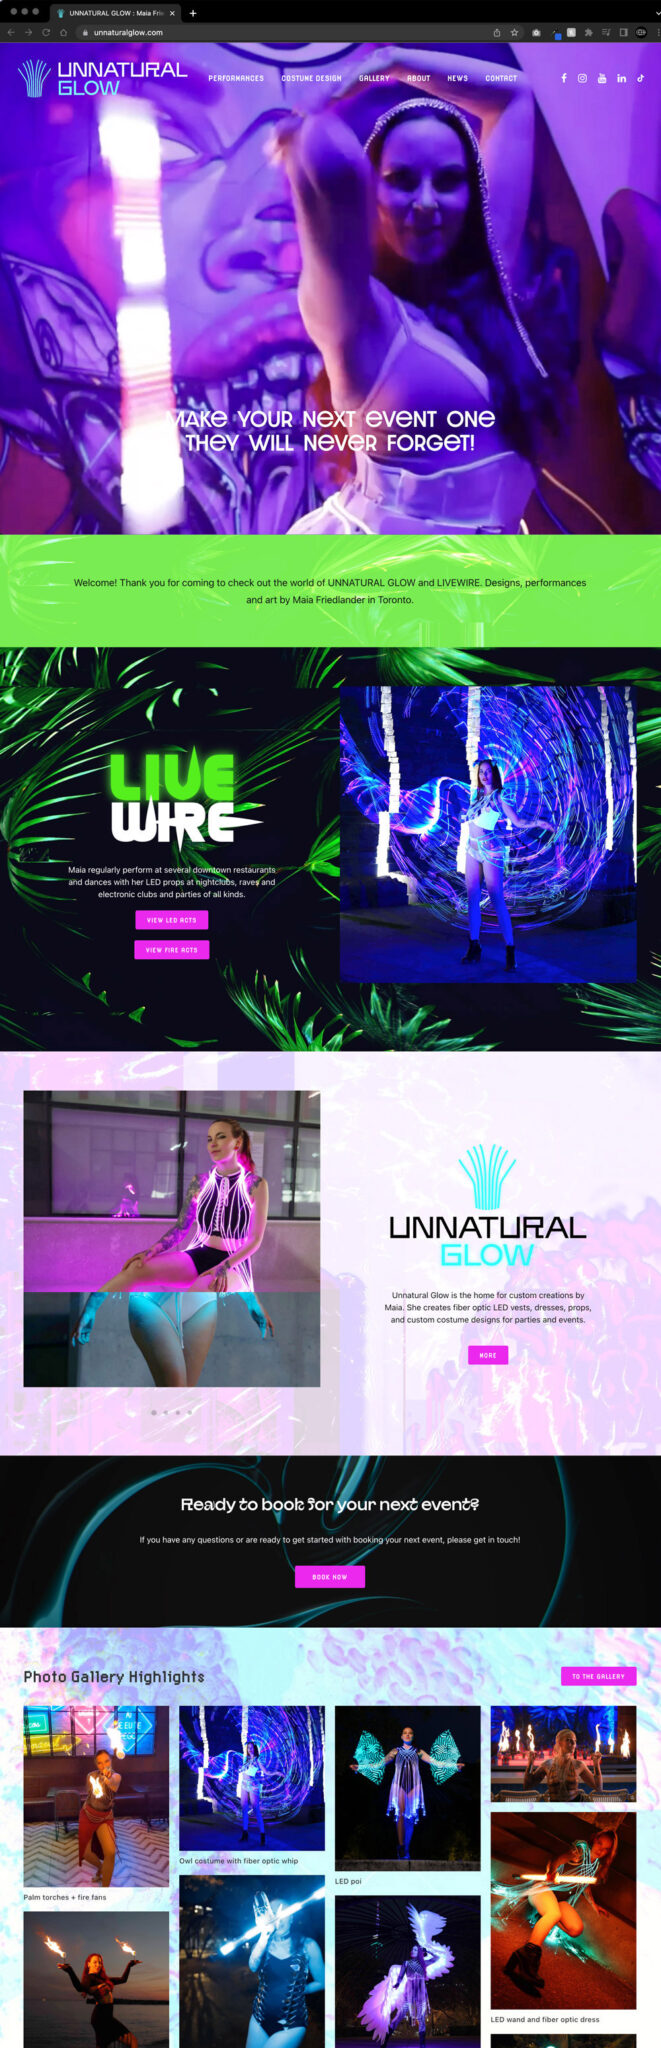 Unnatural-Glow-website-design-toronto-designer-performer-website-1